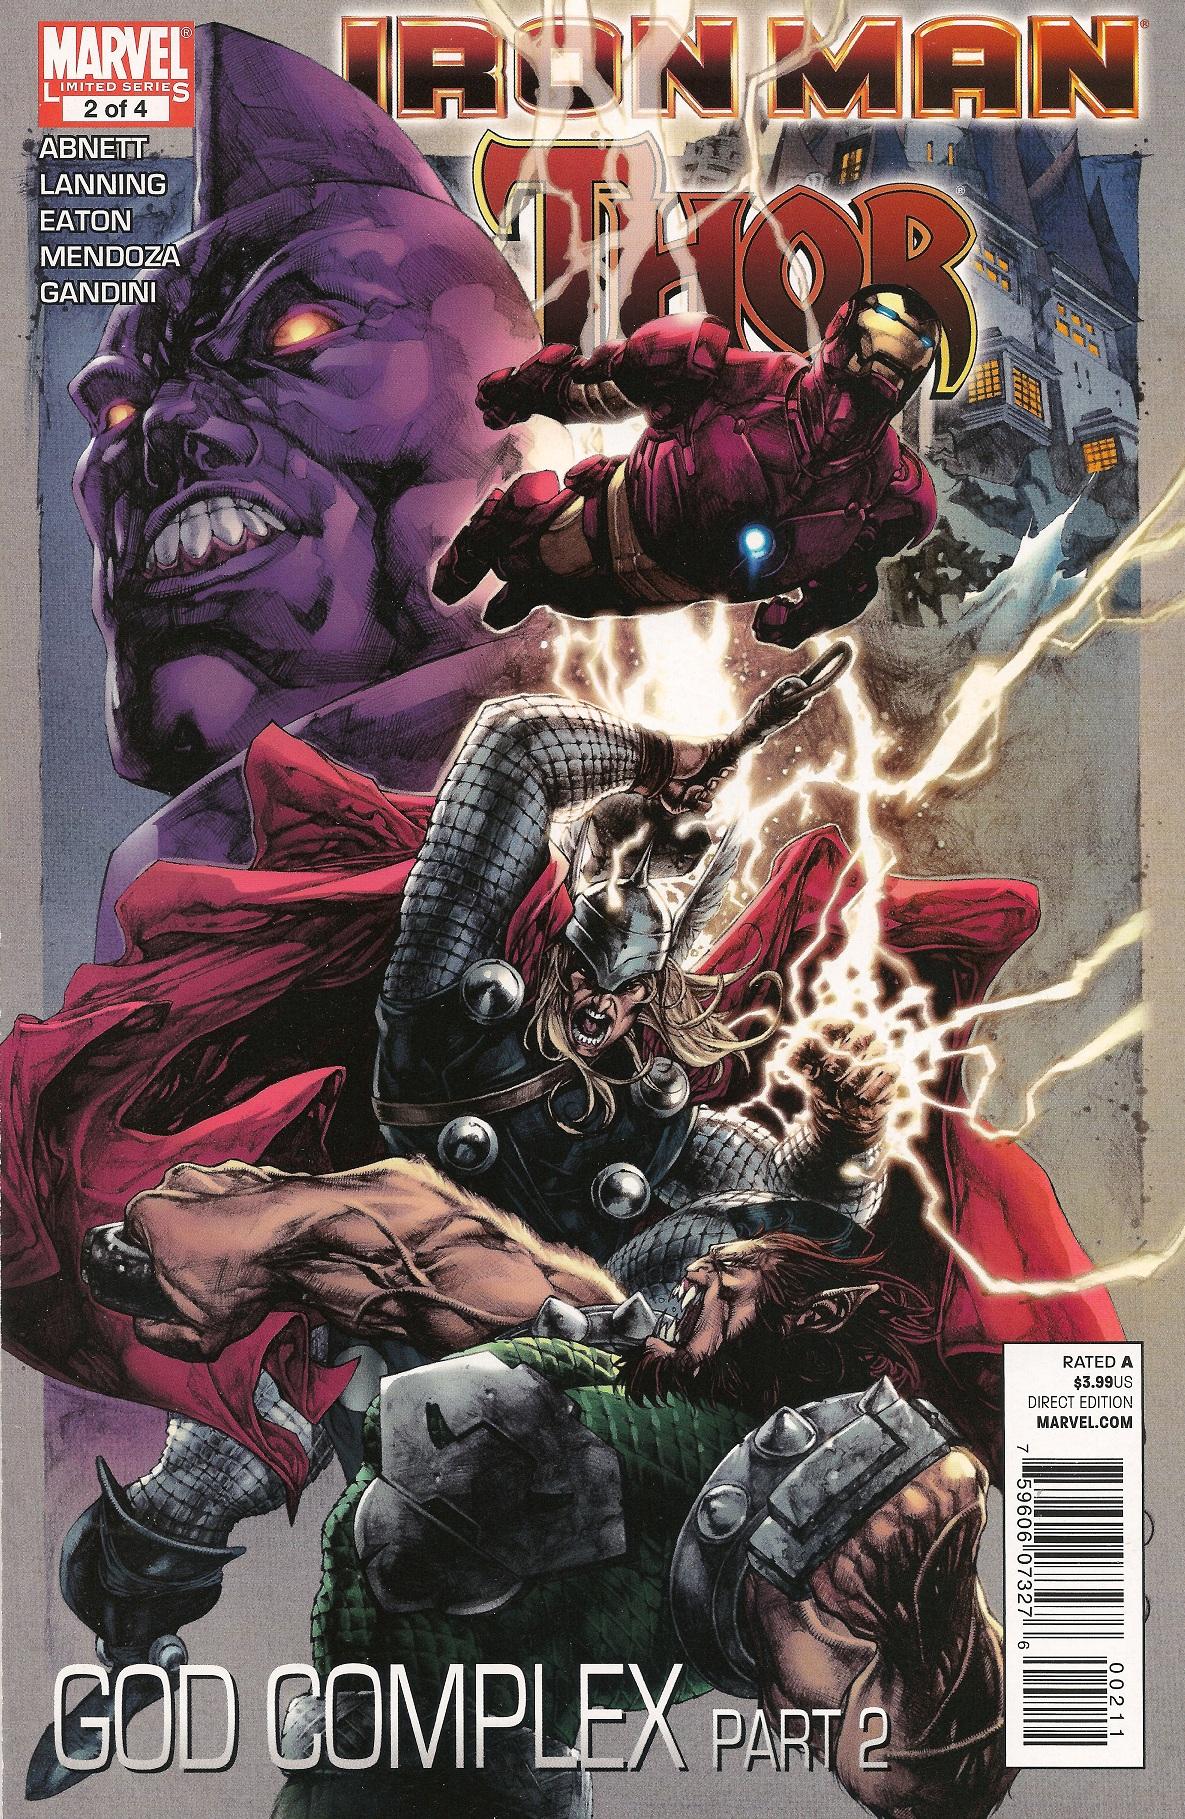 Iron Man/Thor Vol. 1 #2